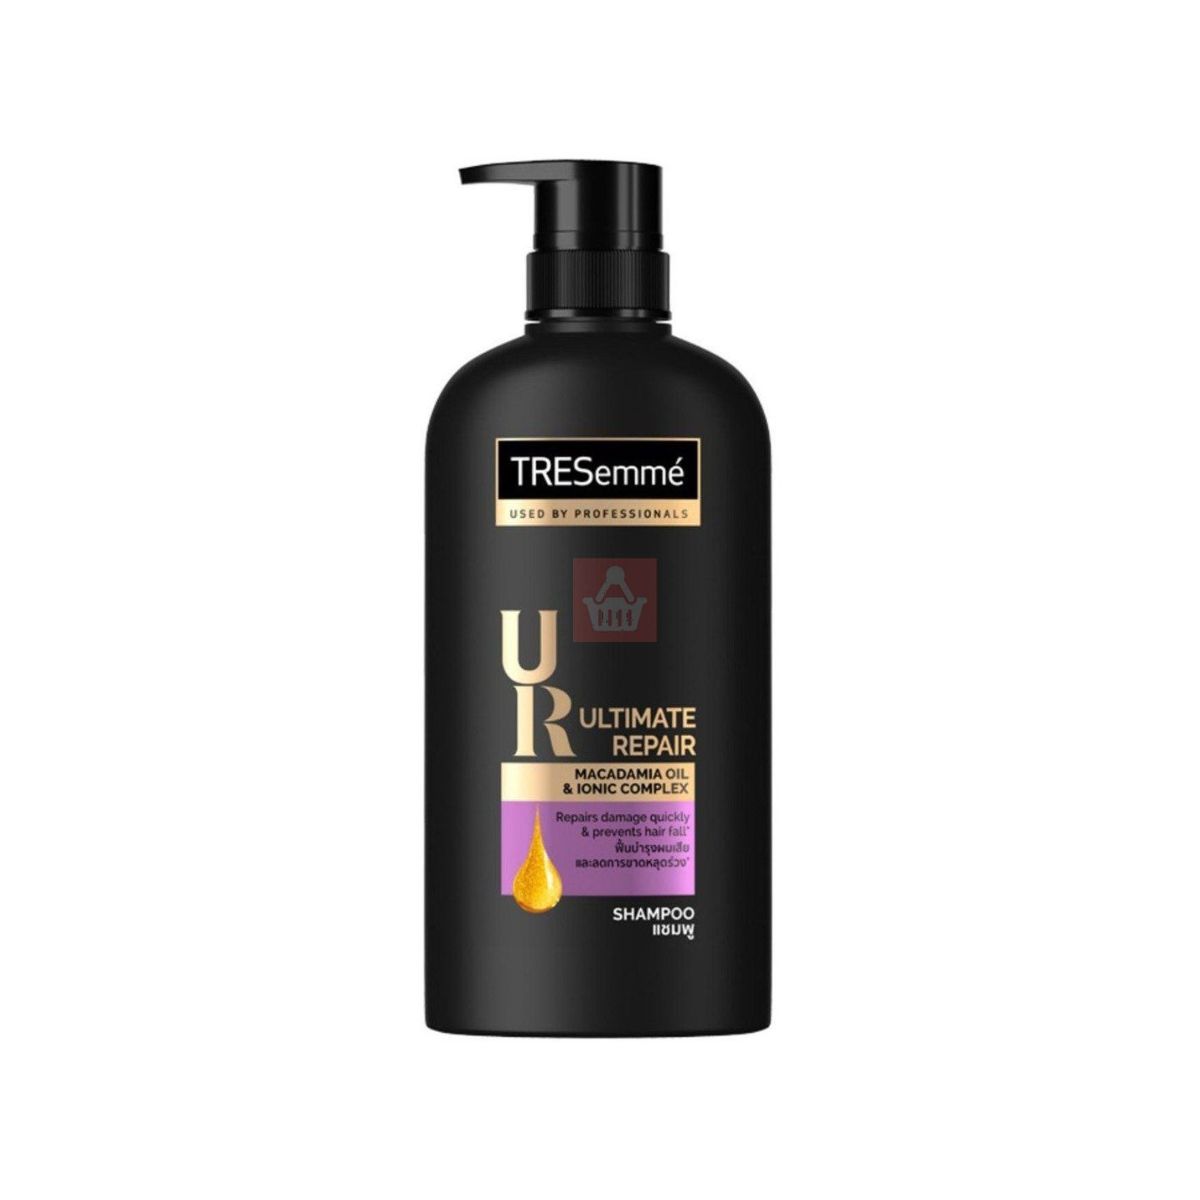 Tresemme Ultimate Repair Macadamia Oil & Ionic Complex Shampoo - 450ml